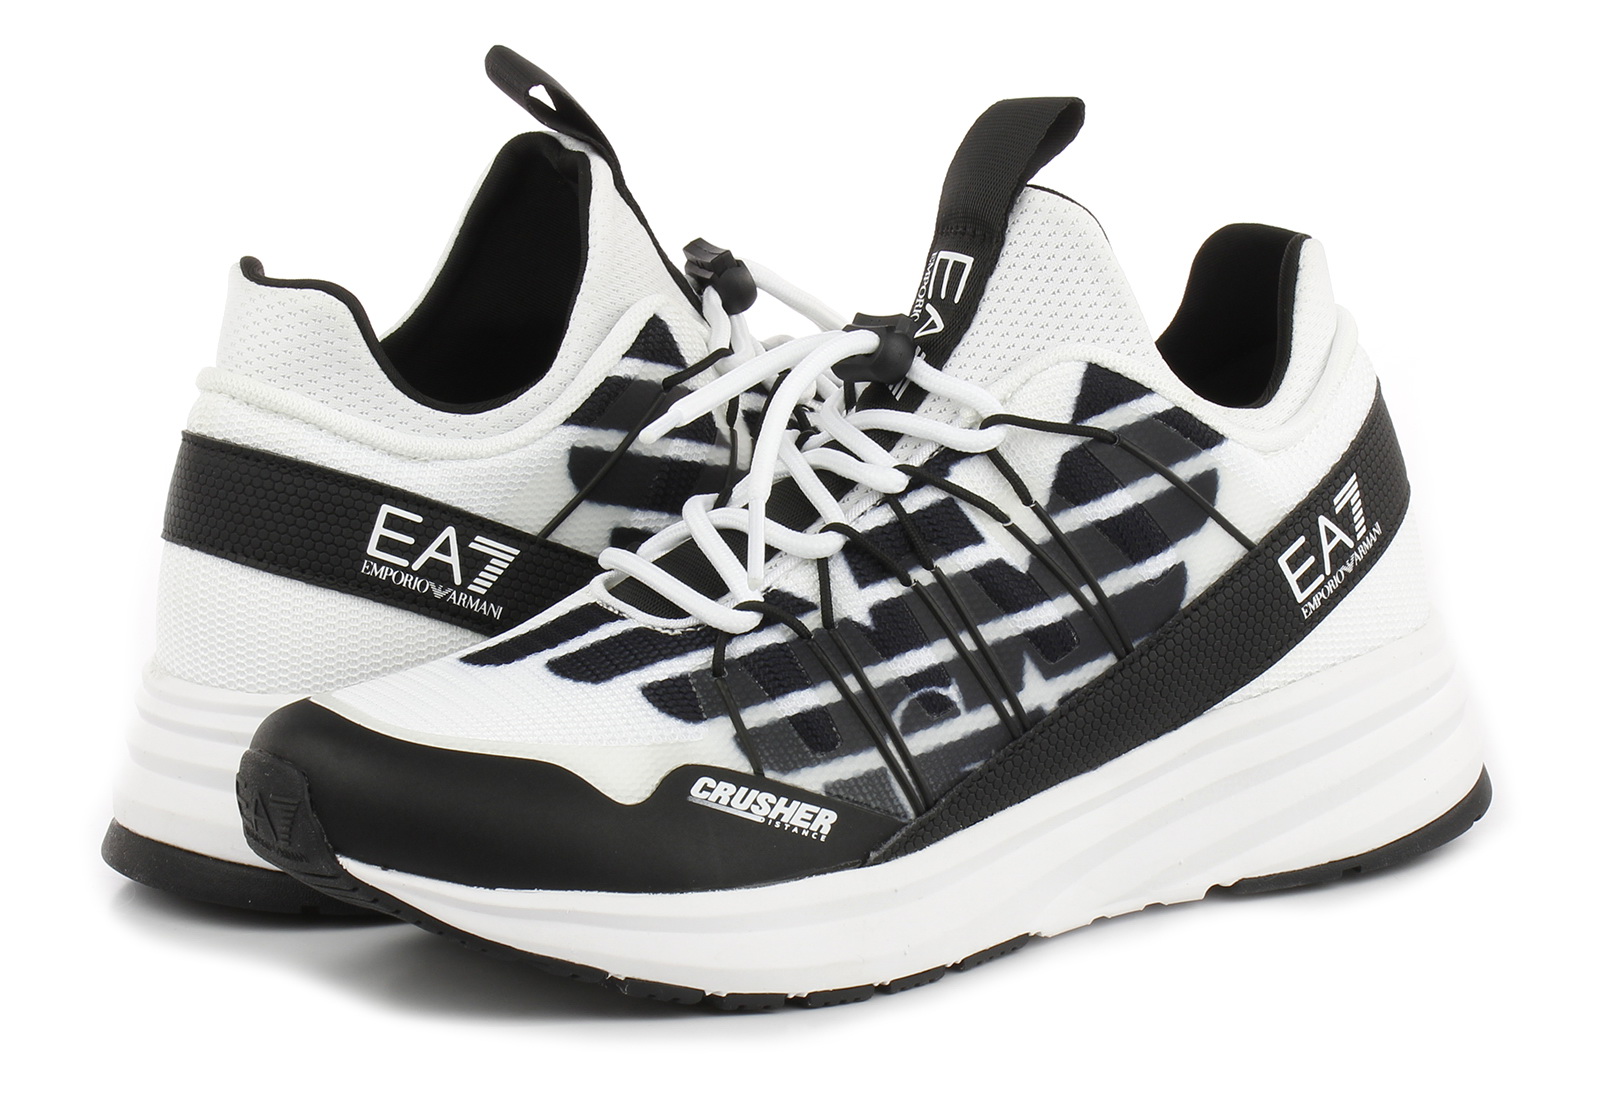 EA7 Emporio Armani Sneakers - Crusher Distance - X092-XK237-611 